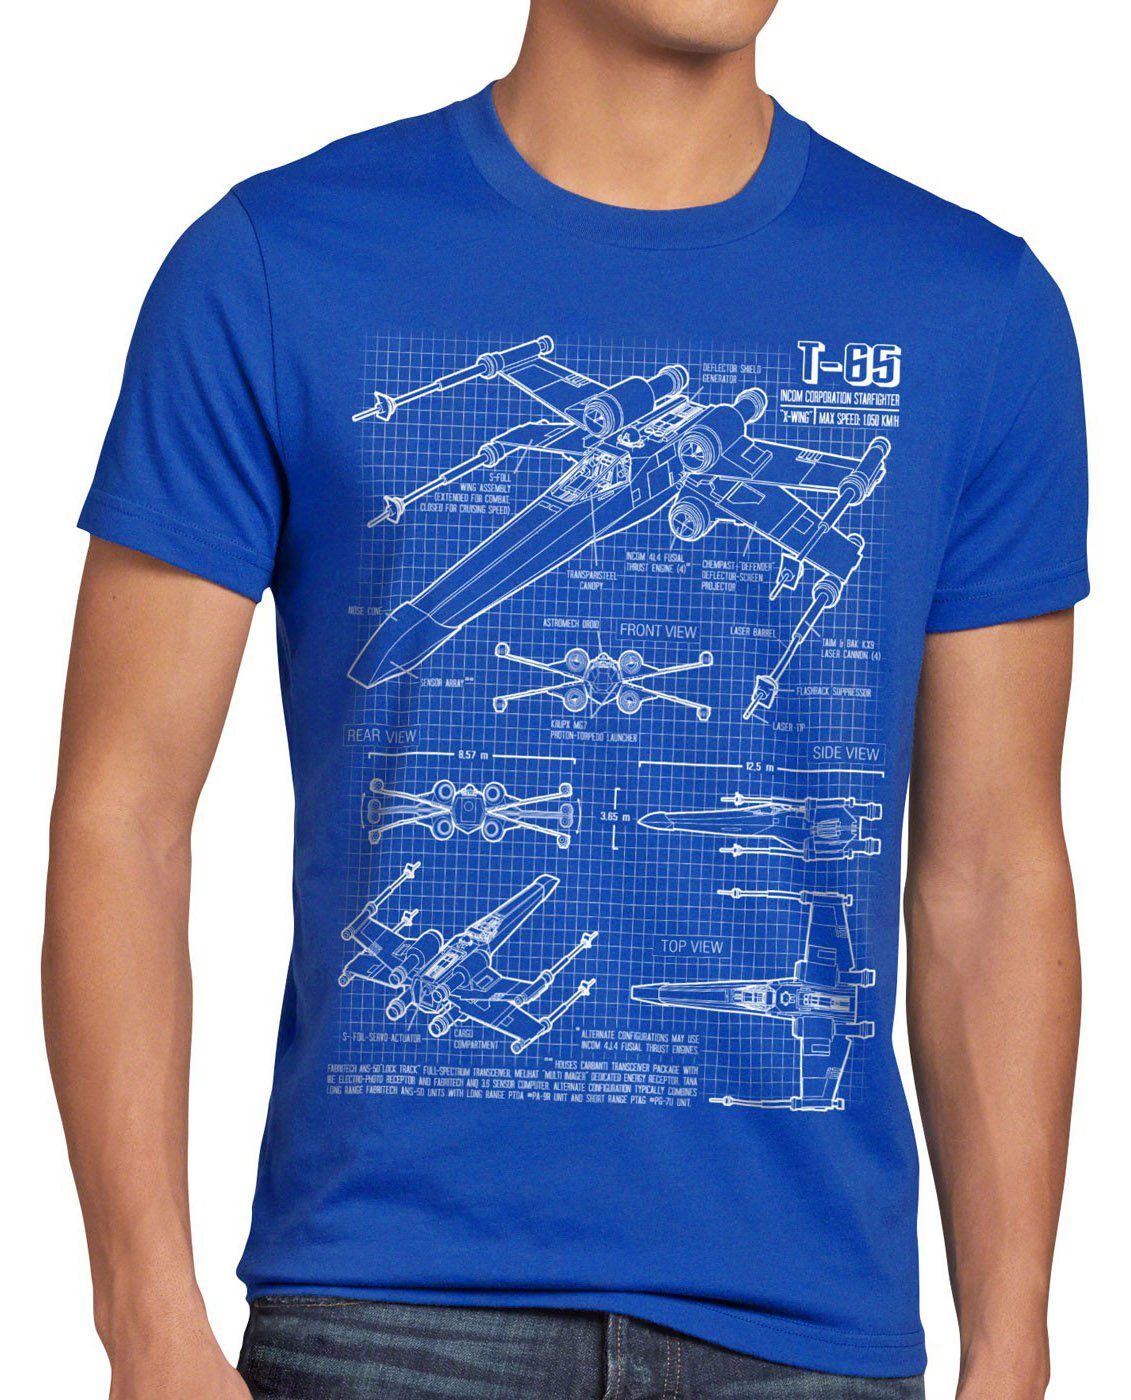 T-Shirt rebellion star style3 blau wing x-flühler Jäger battlefront Print-Shirt Herren T-65 wars darth